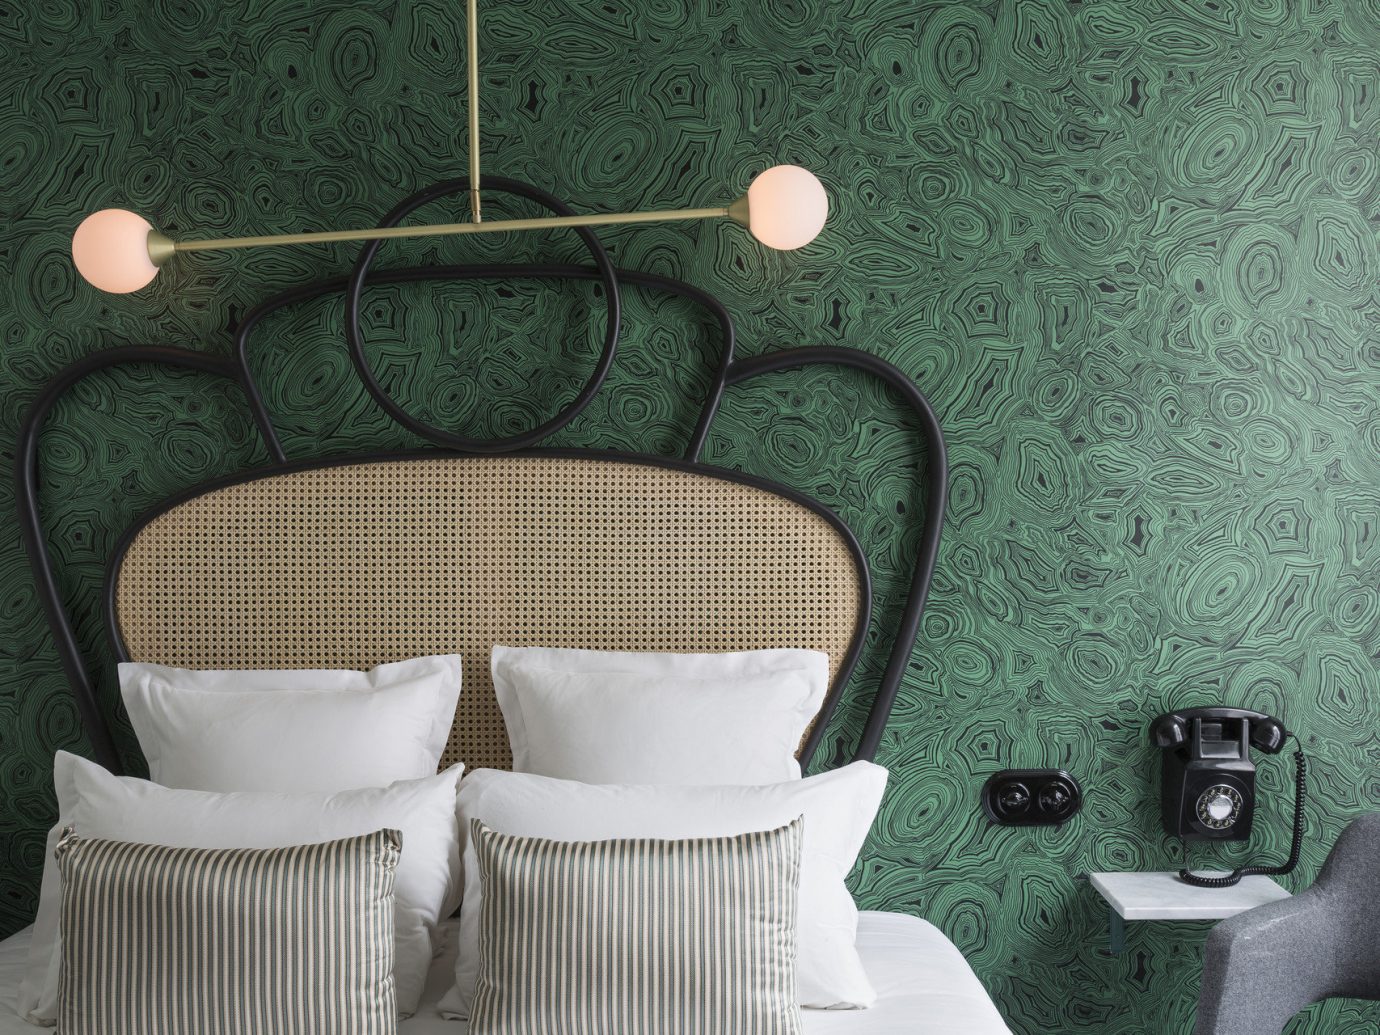 bed Bedroom Hotels interior man made object room green indoor light wall lighting chair Design interior design furniture